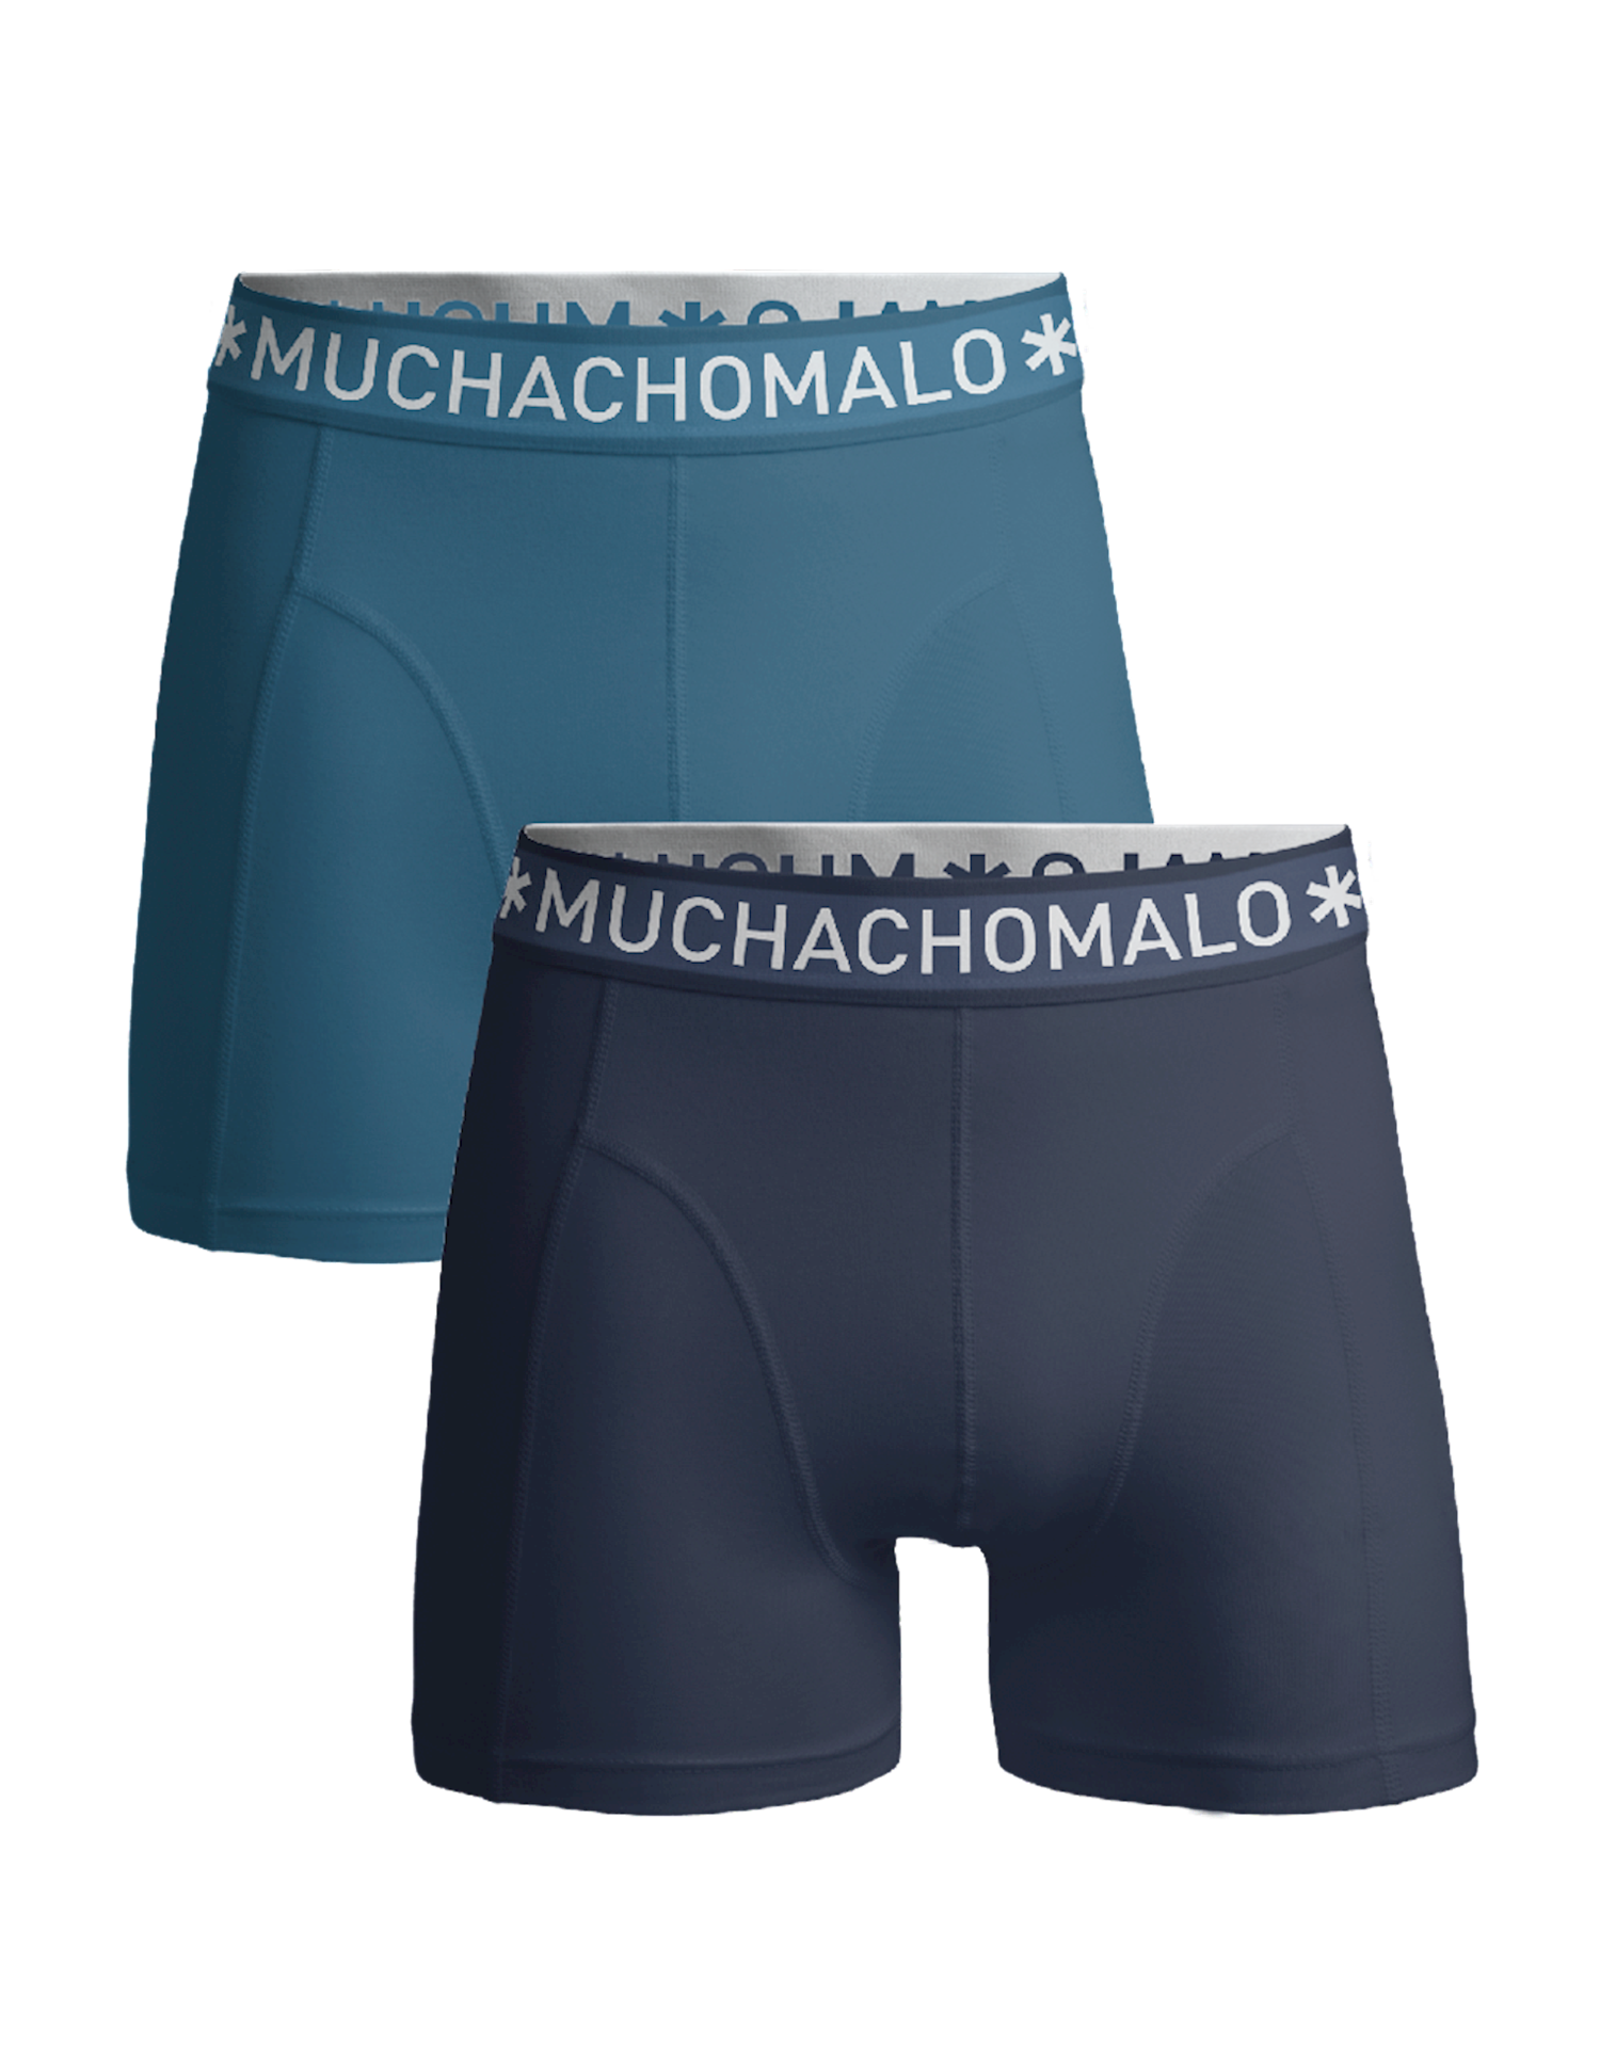 Muchachomalo Boxershort 2-pack solid1010-608j - grijs+blauw